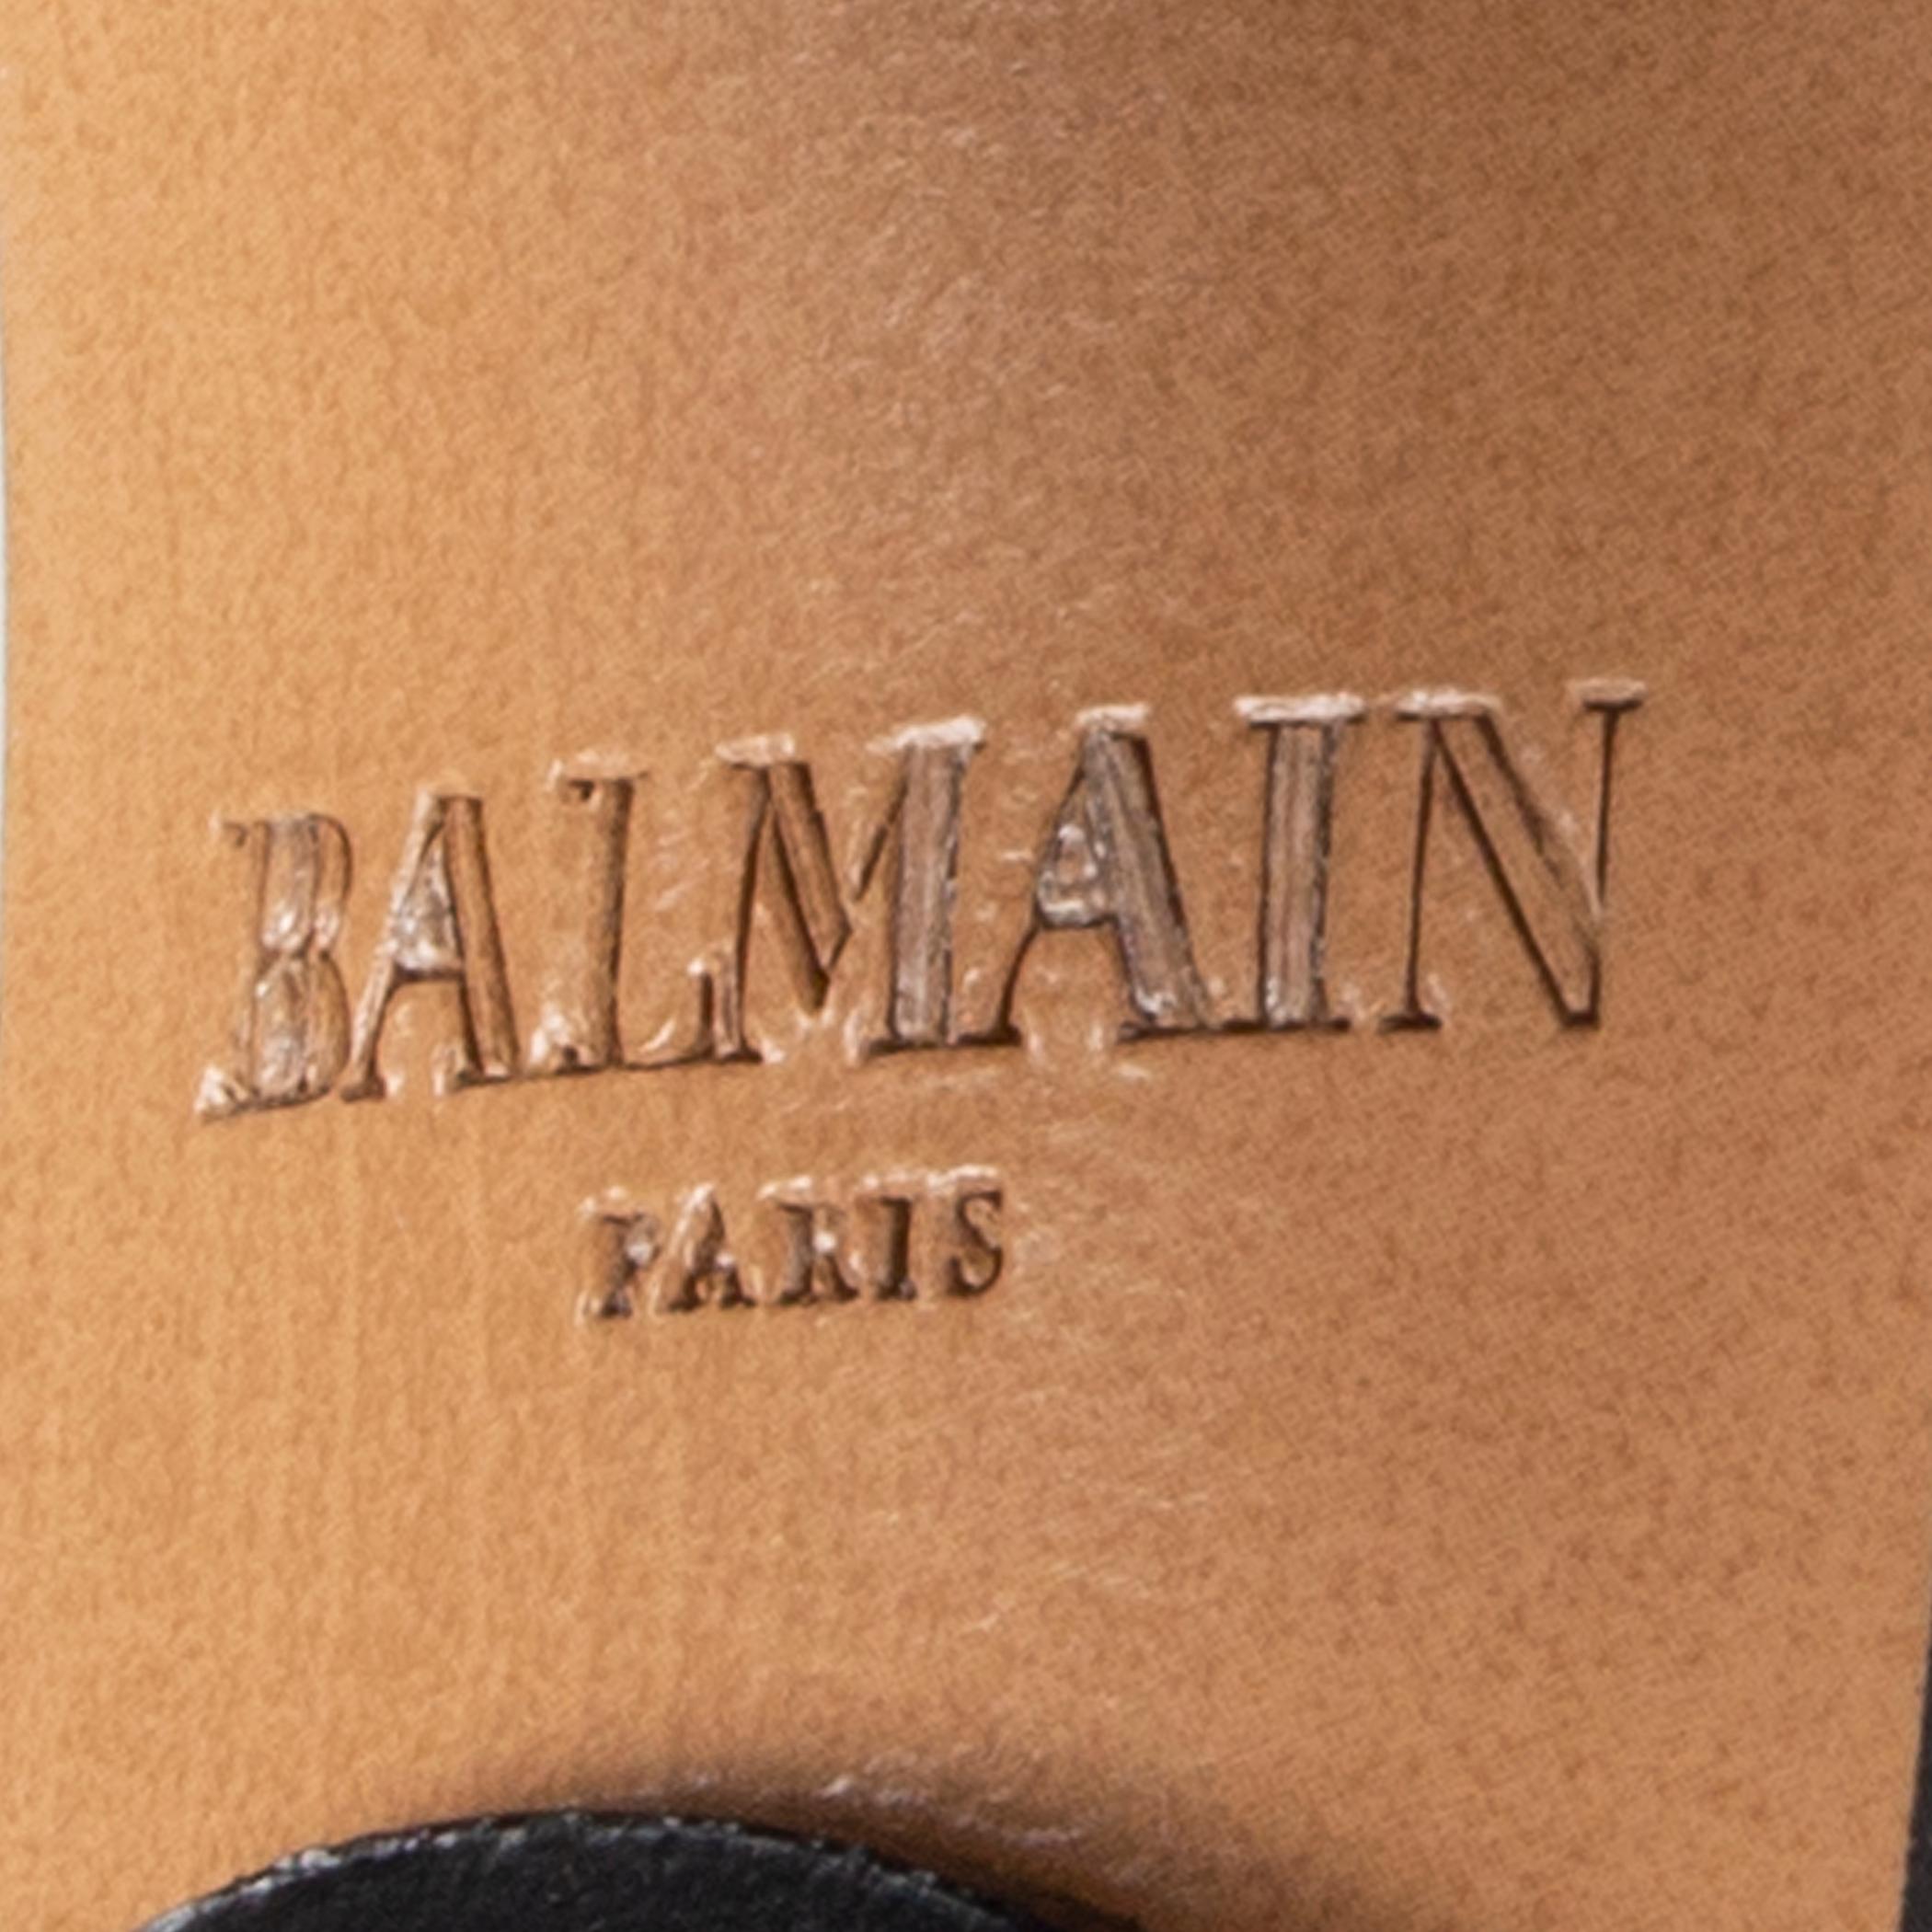 Black BALMAIN black & white leather CALAMITY Lace-Up Boots Shoes 38